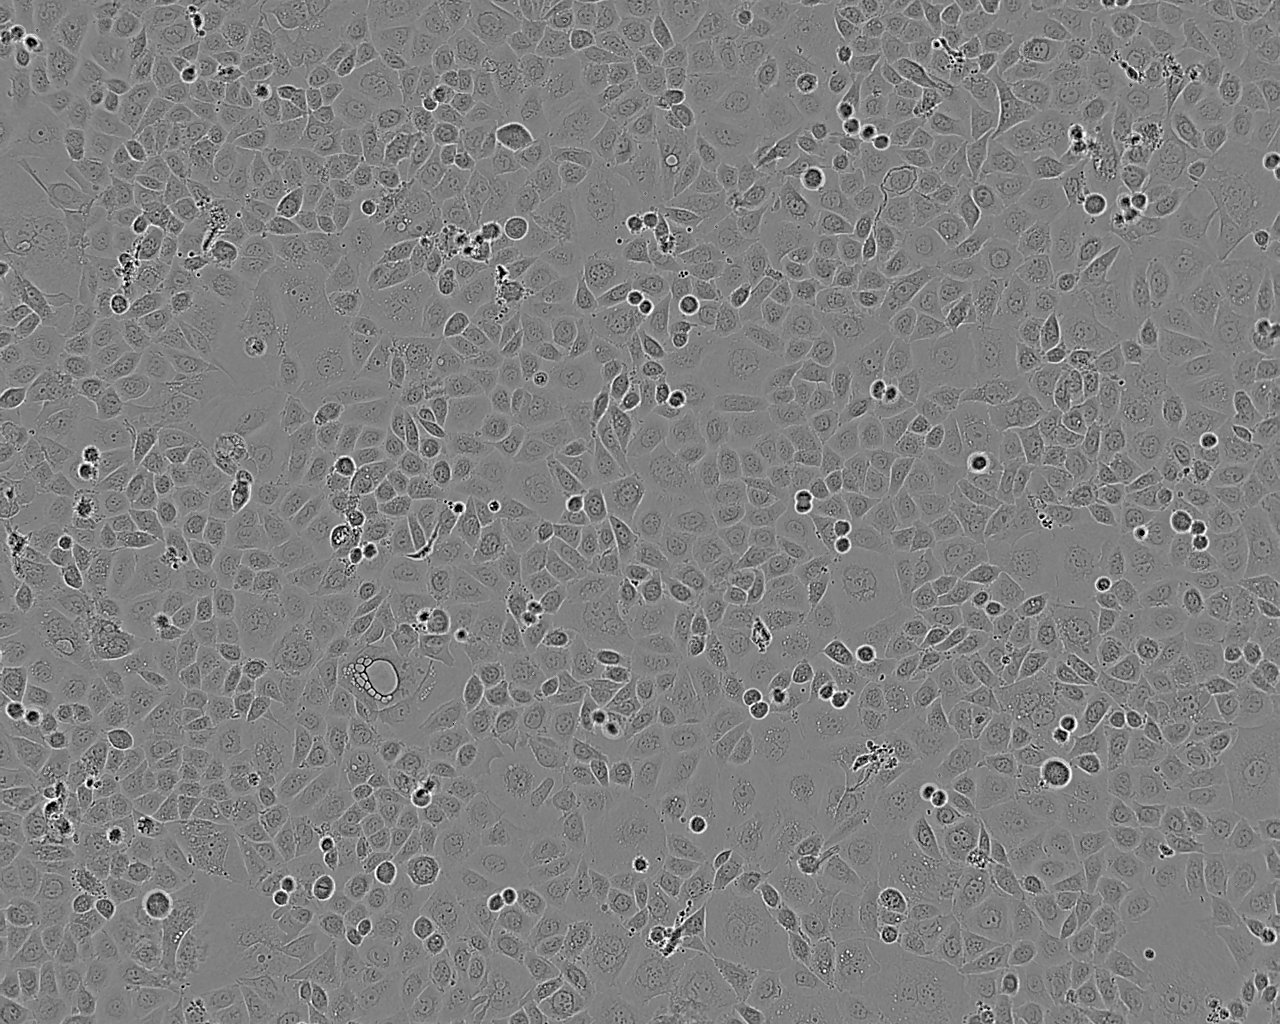 MDA-MB-436 Cells|人乳腺癌细胞系